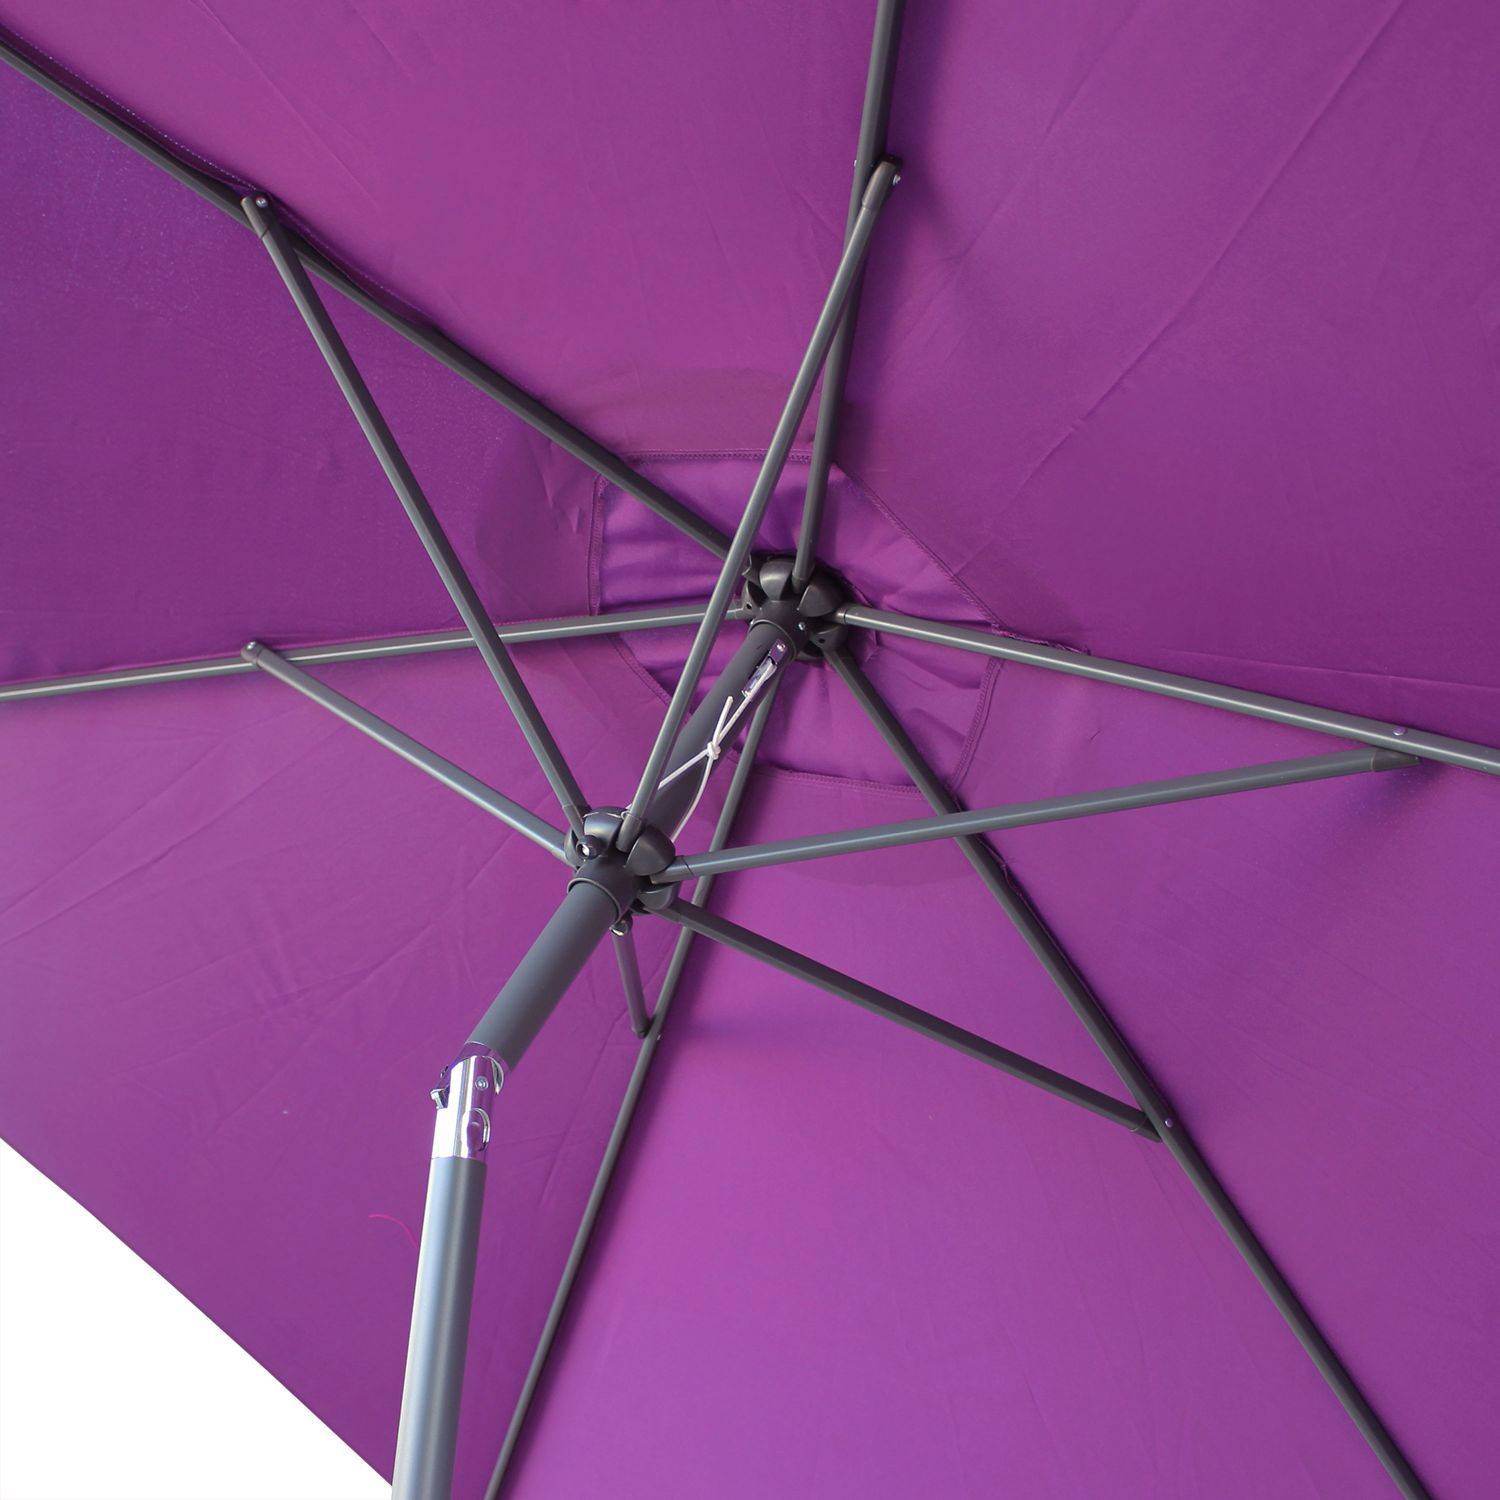 Sombrilla jardín, parasol morado, mástil central, inclinable, redondo, Ø300 cm, Touquet Photo6